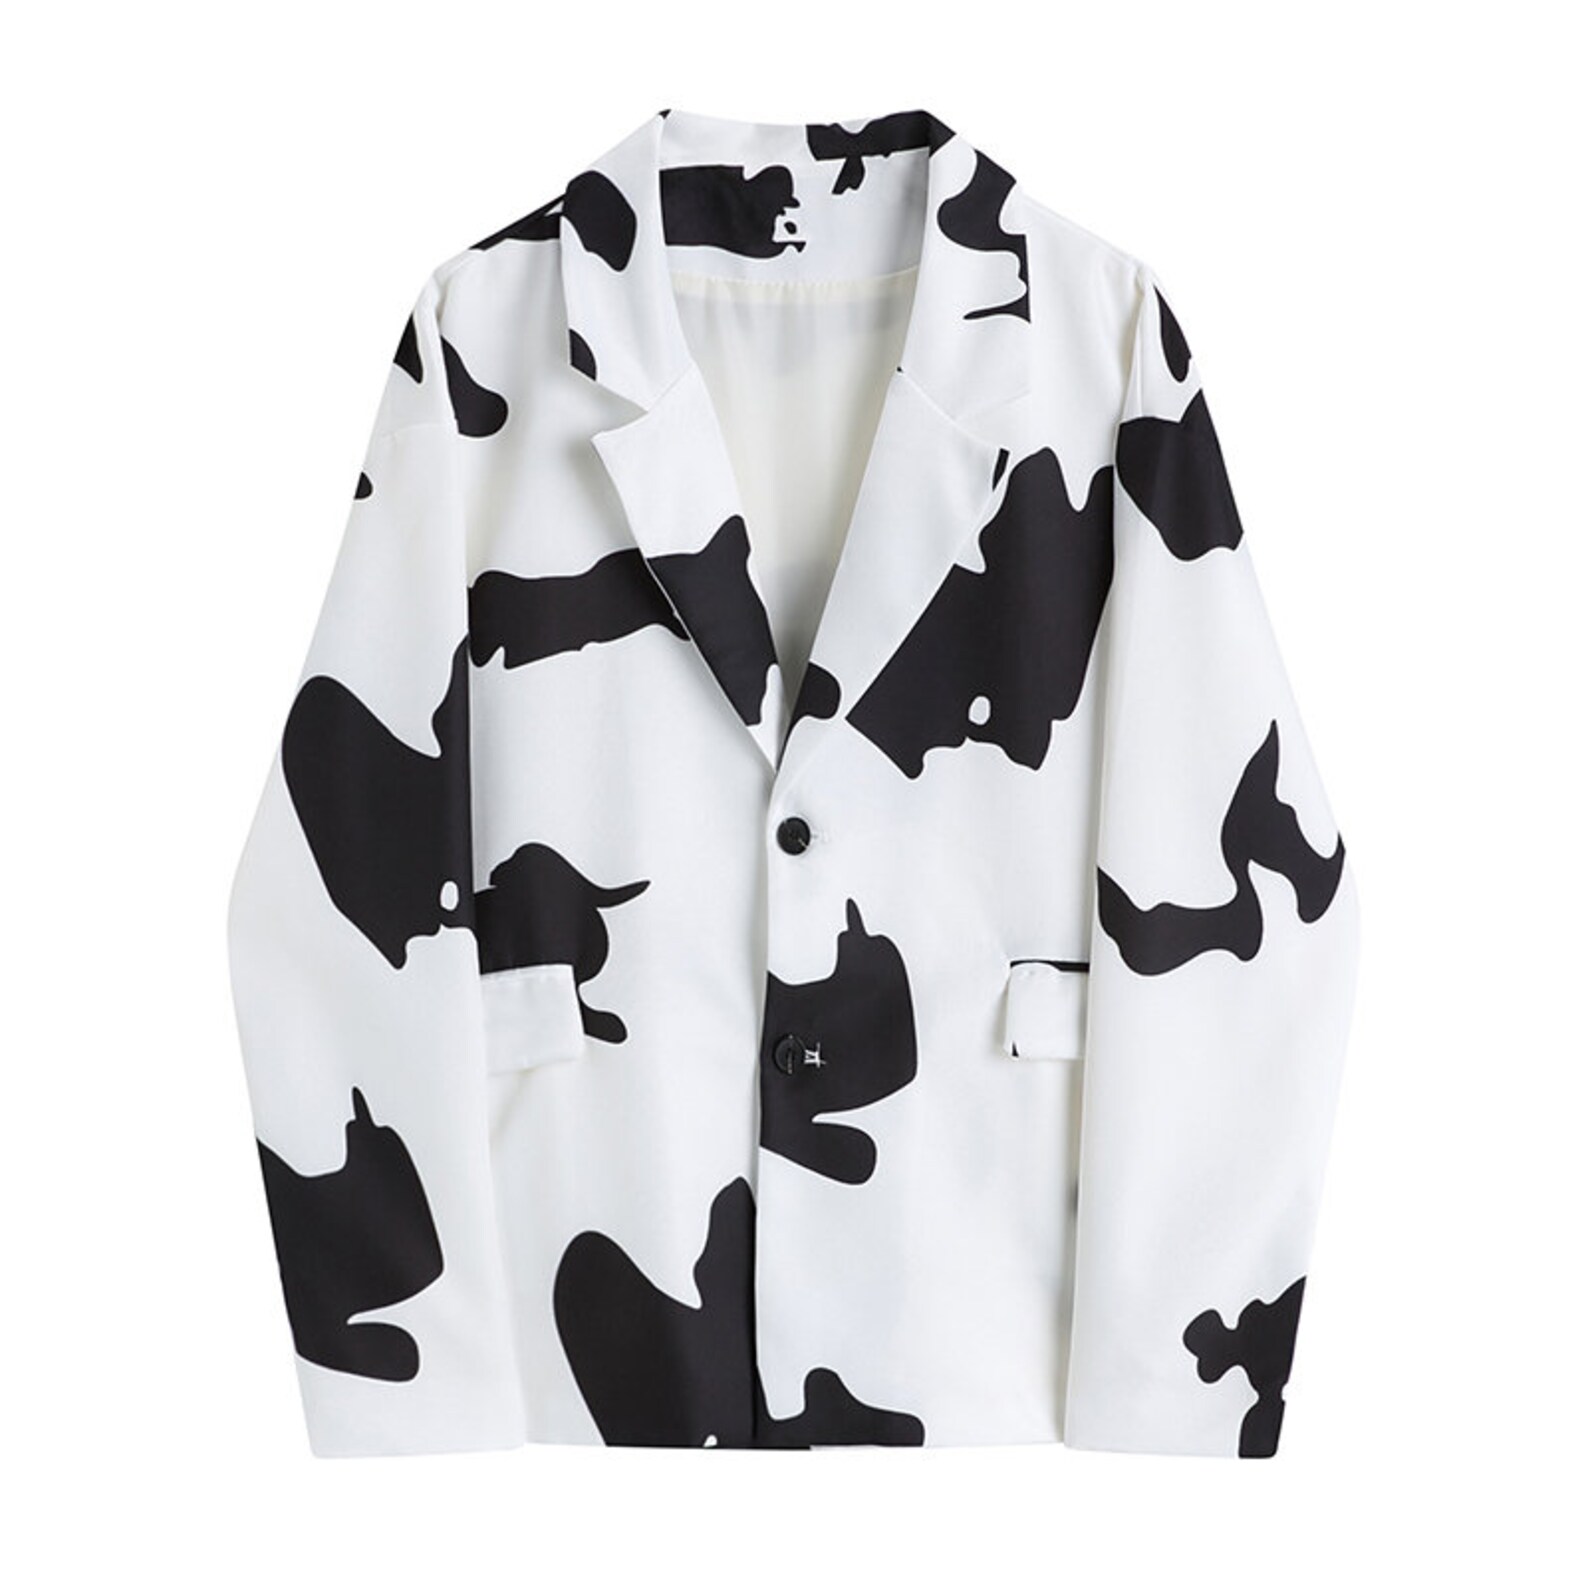 Cow pattern white blazer women suit in black & white graphcis | Etsy